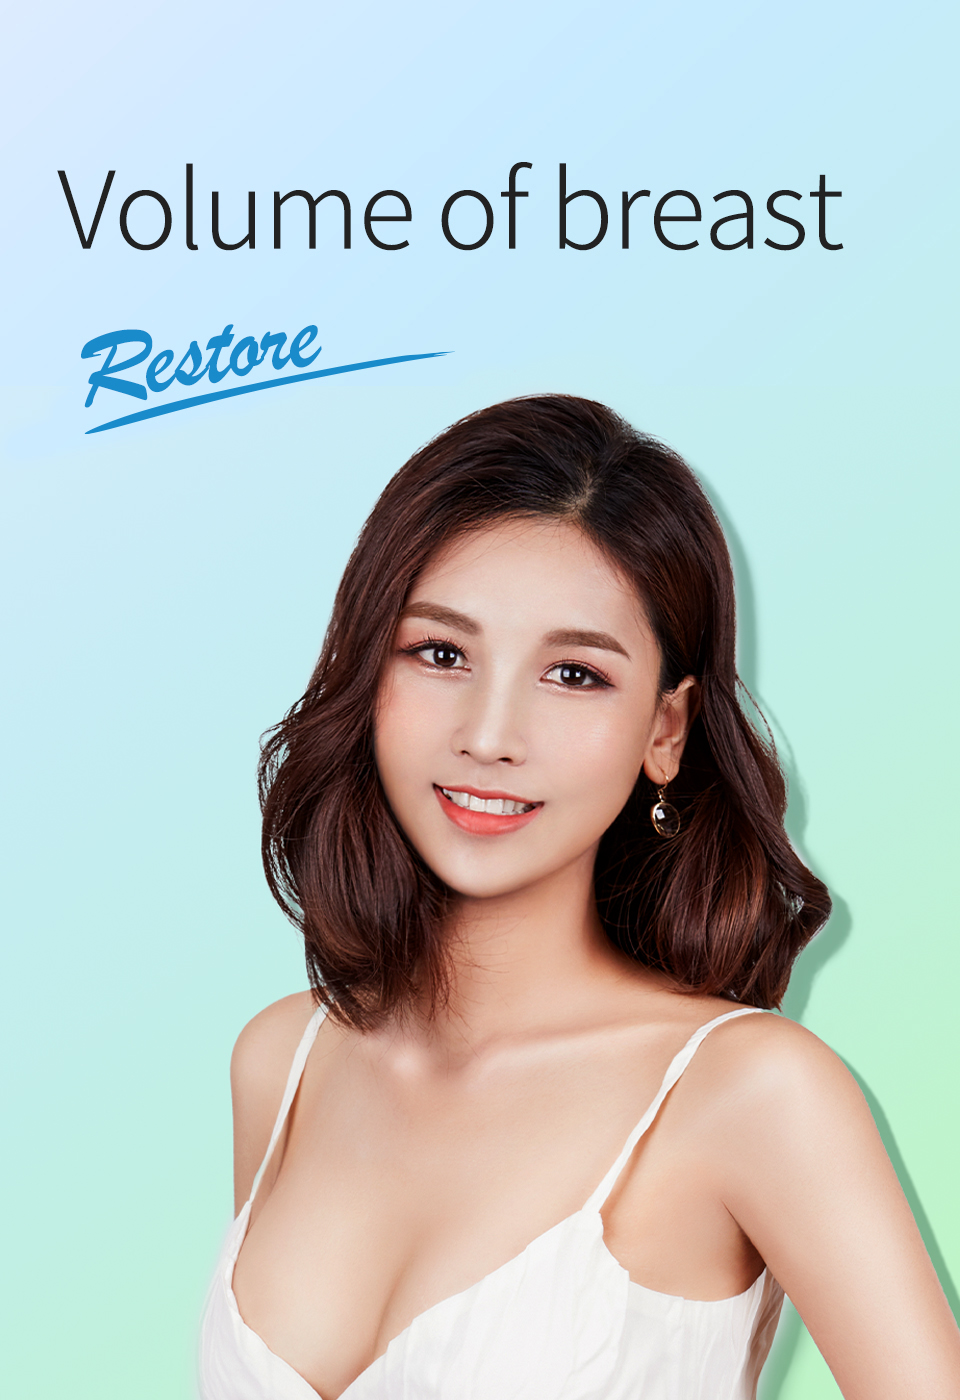 Volume of breast restore